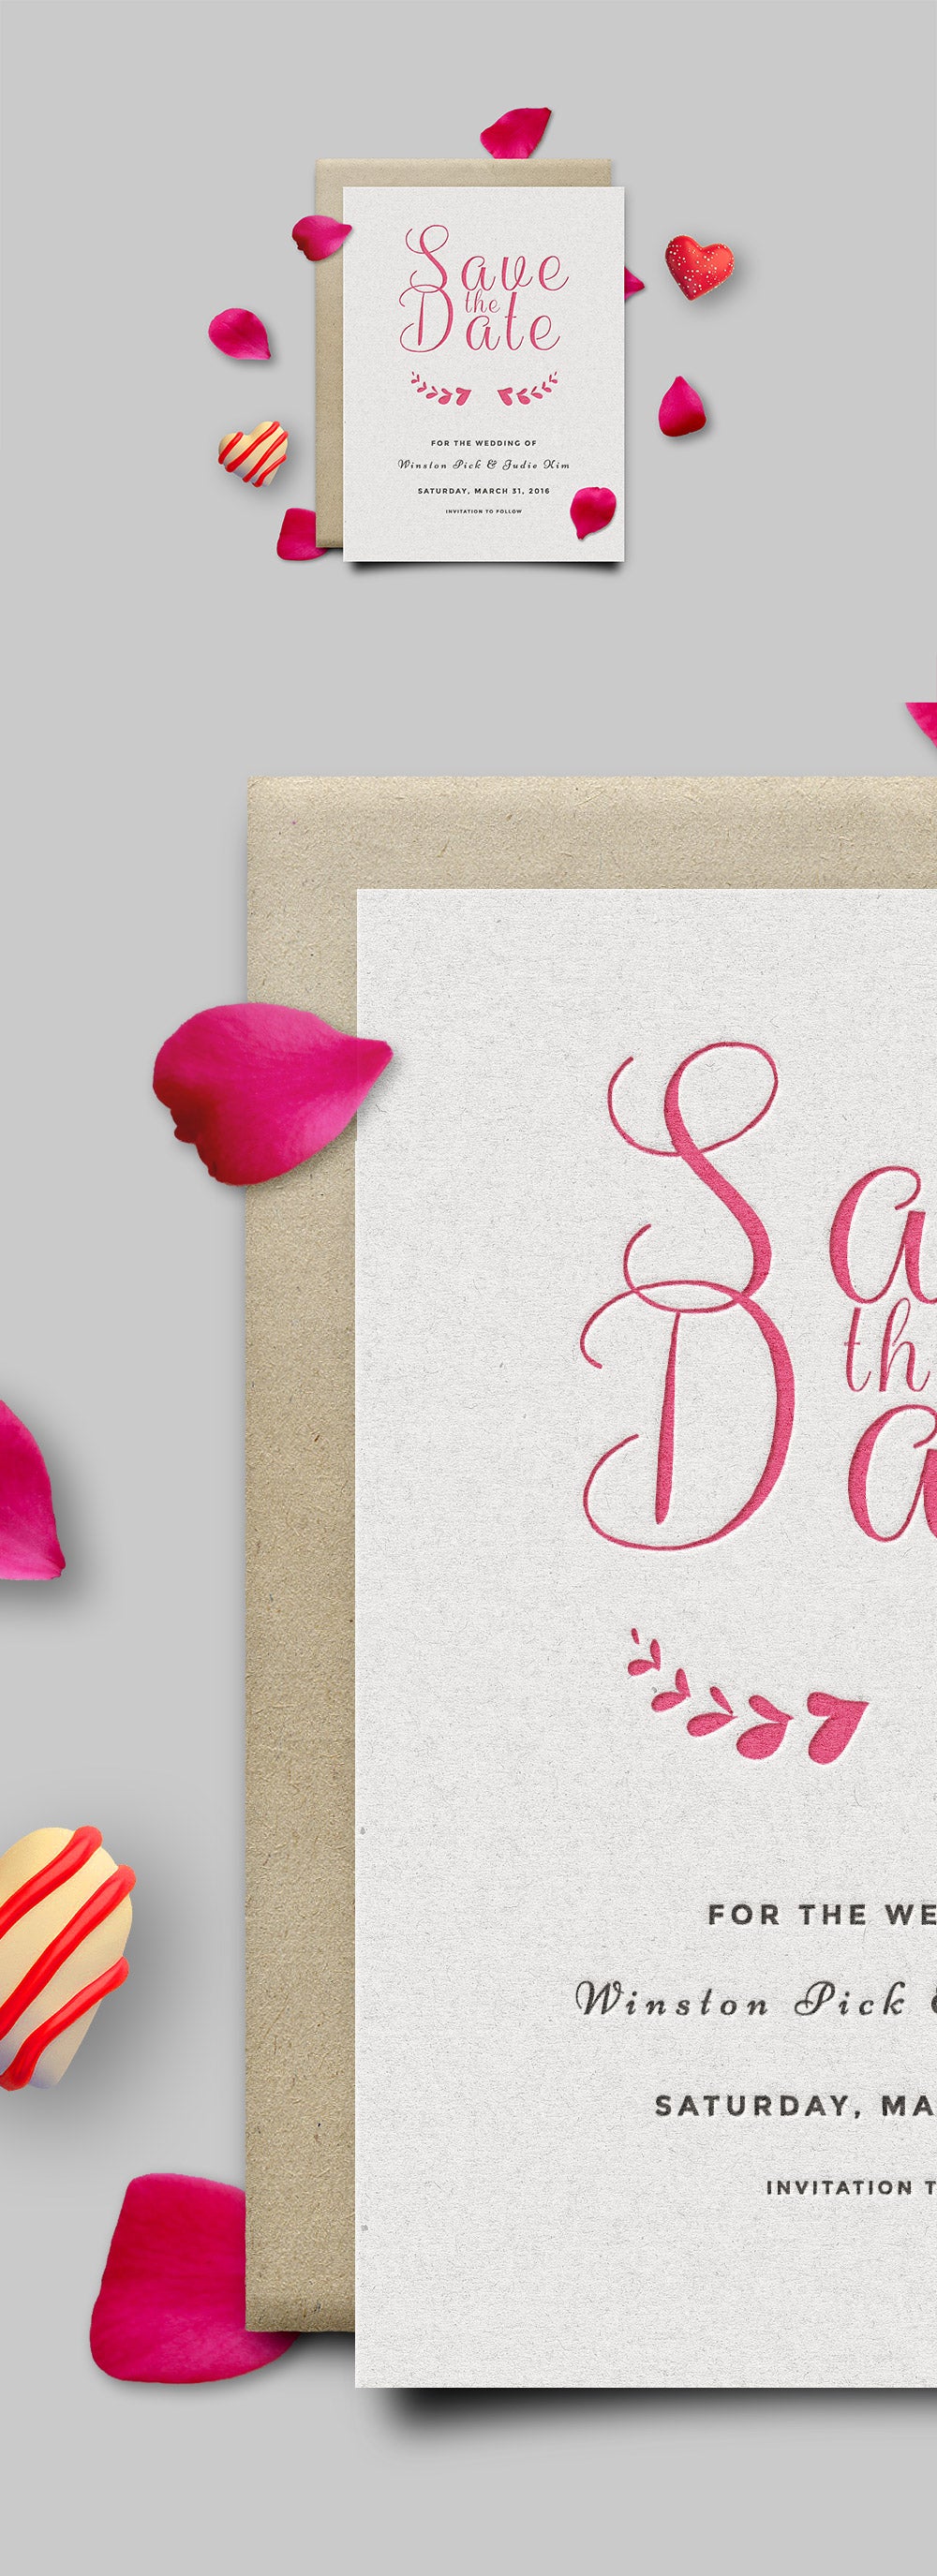 Download Save The Date Or Valentines Day Invitation Card Mockup Psd Mockup Hunt